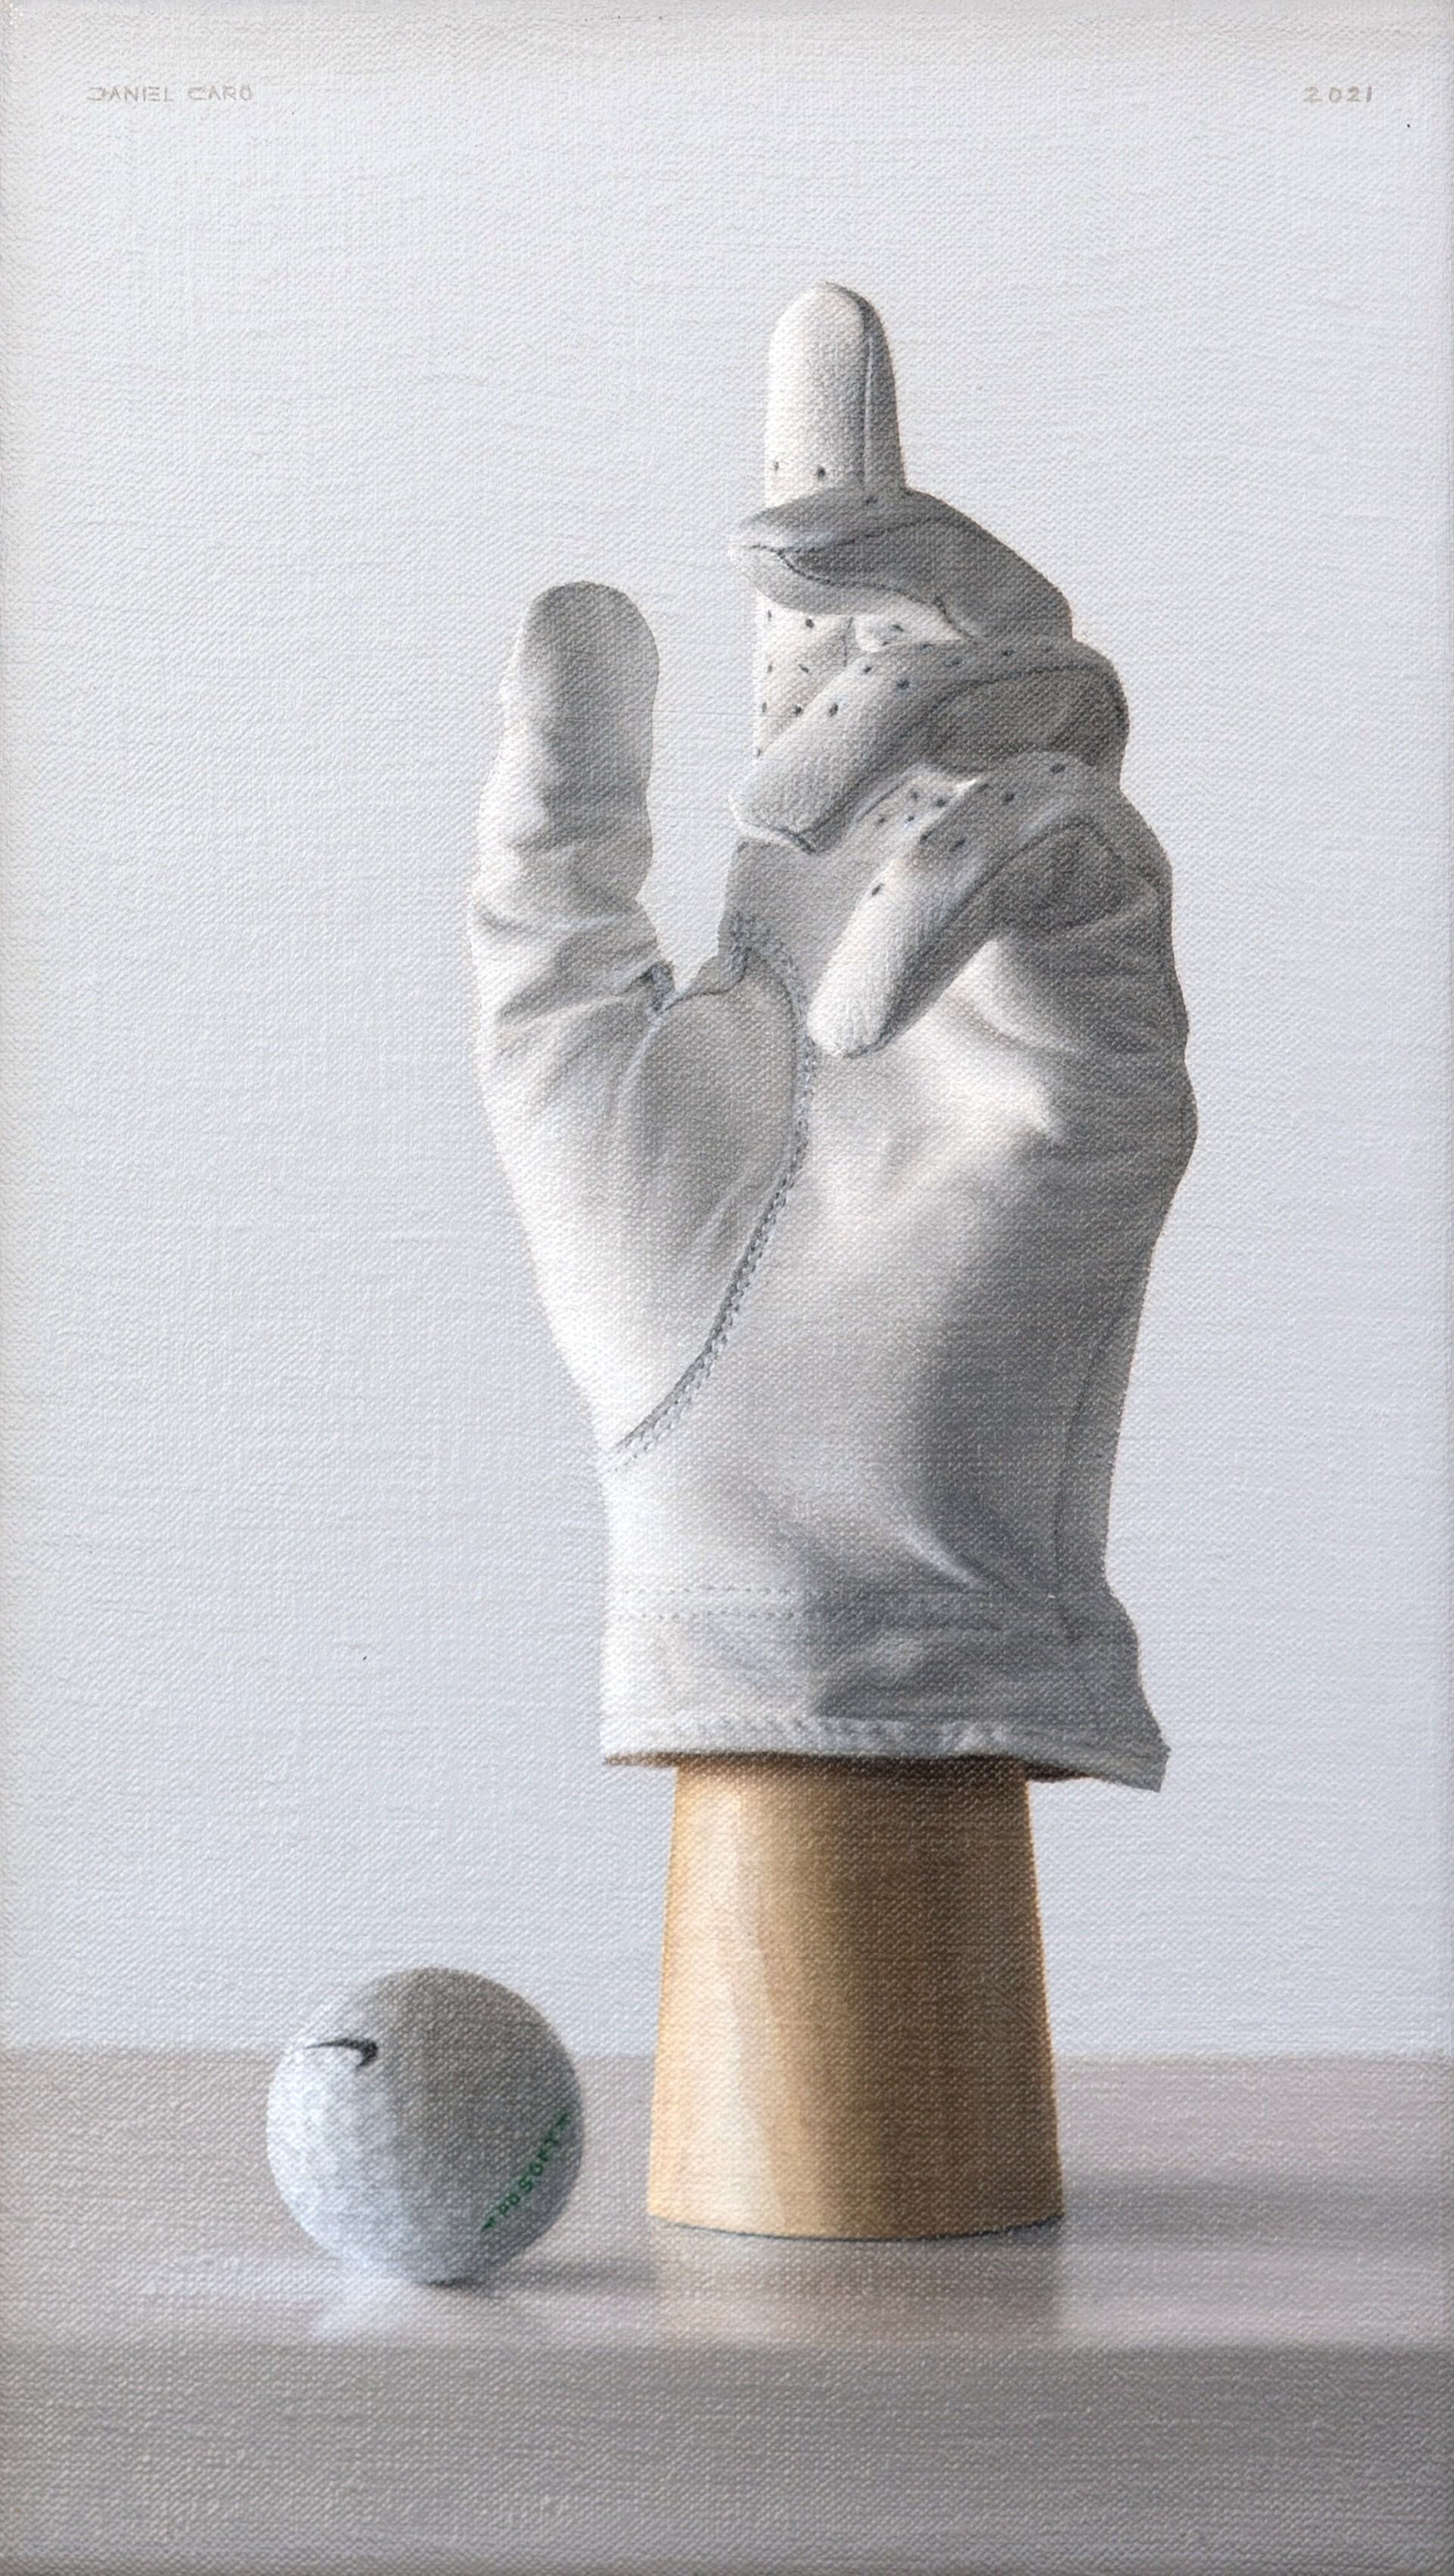 Golf Glove by Daniel Caro